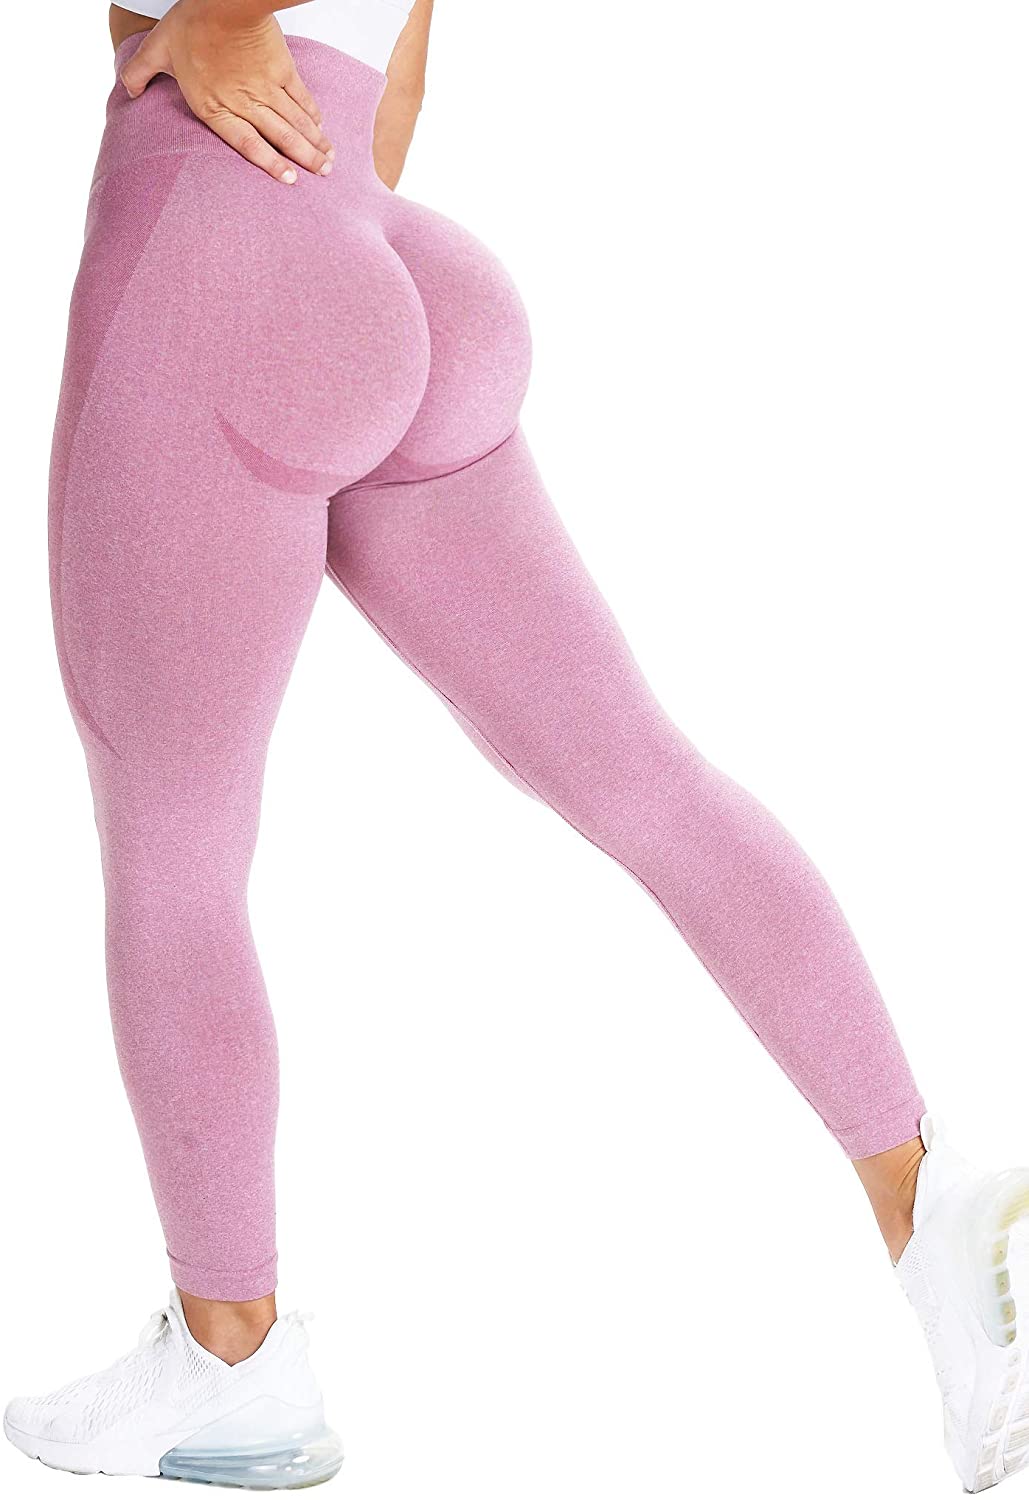 Yoga pants peach butt – Mymissunicorn